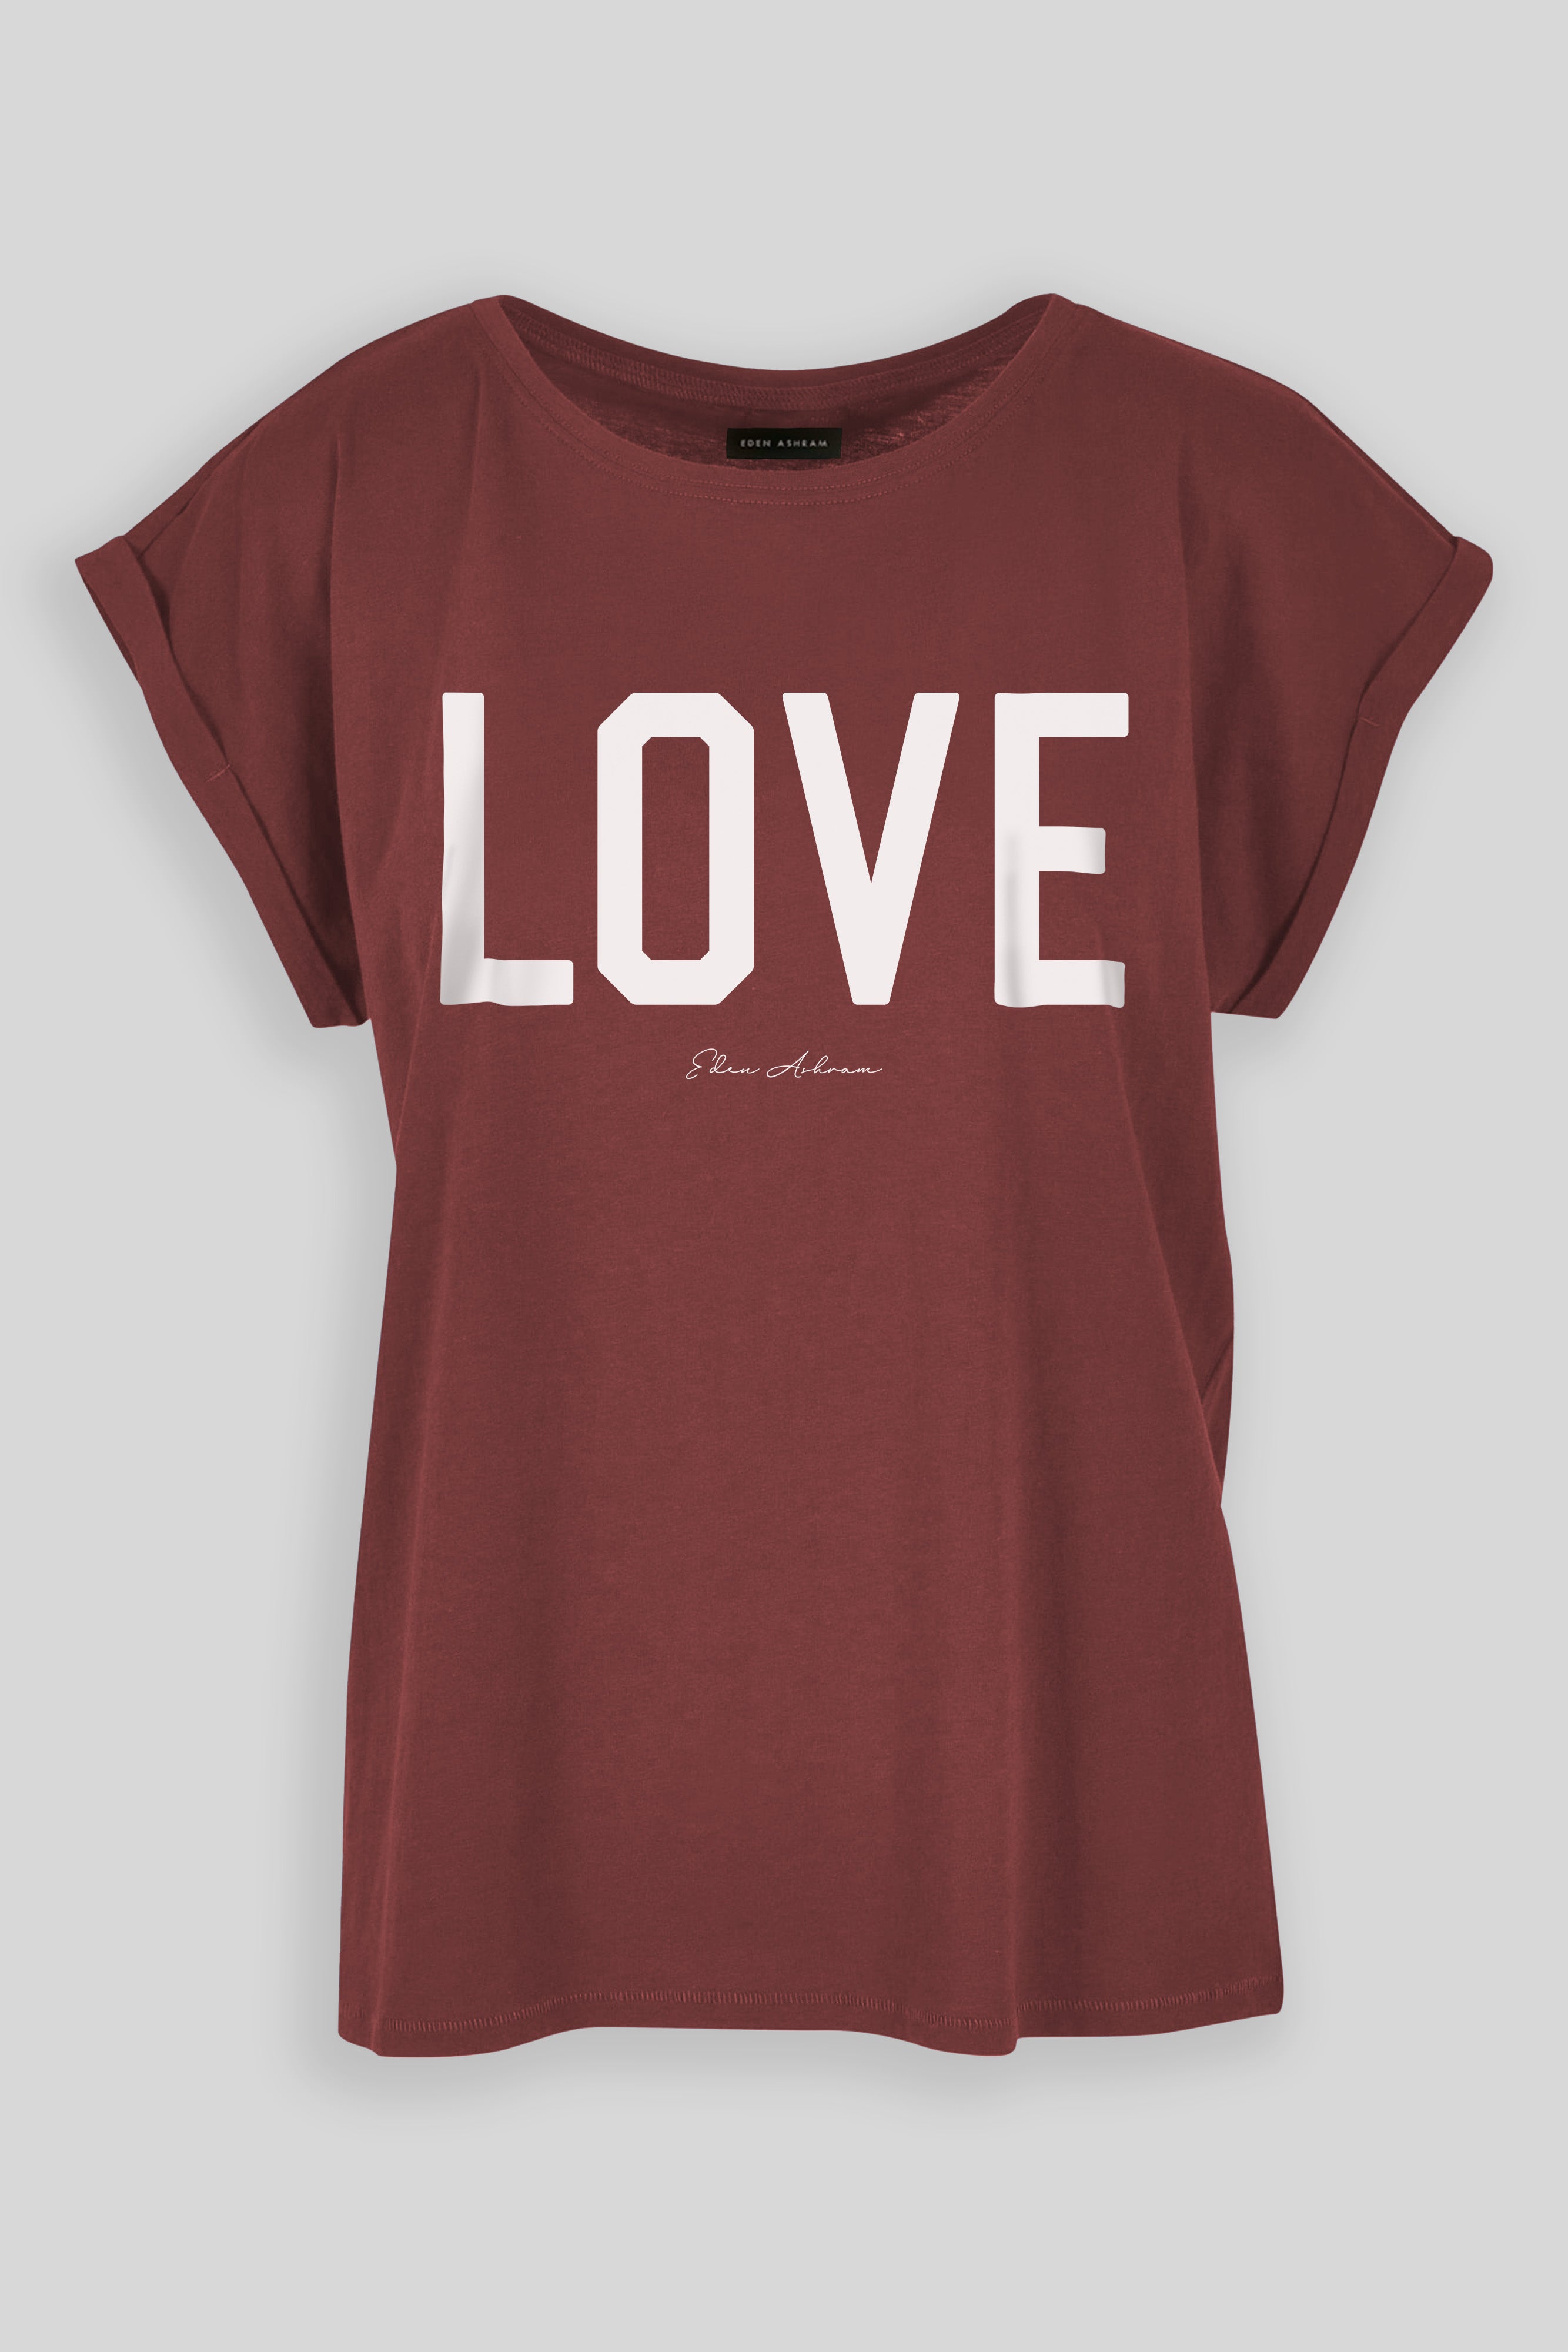 EDEN ASHRAM LOVE Cali T-Shirt Cherry